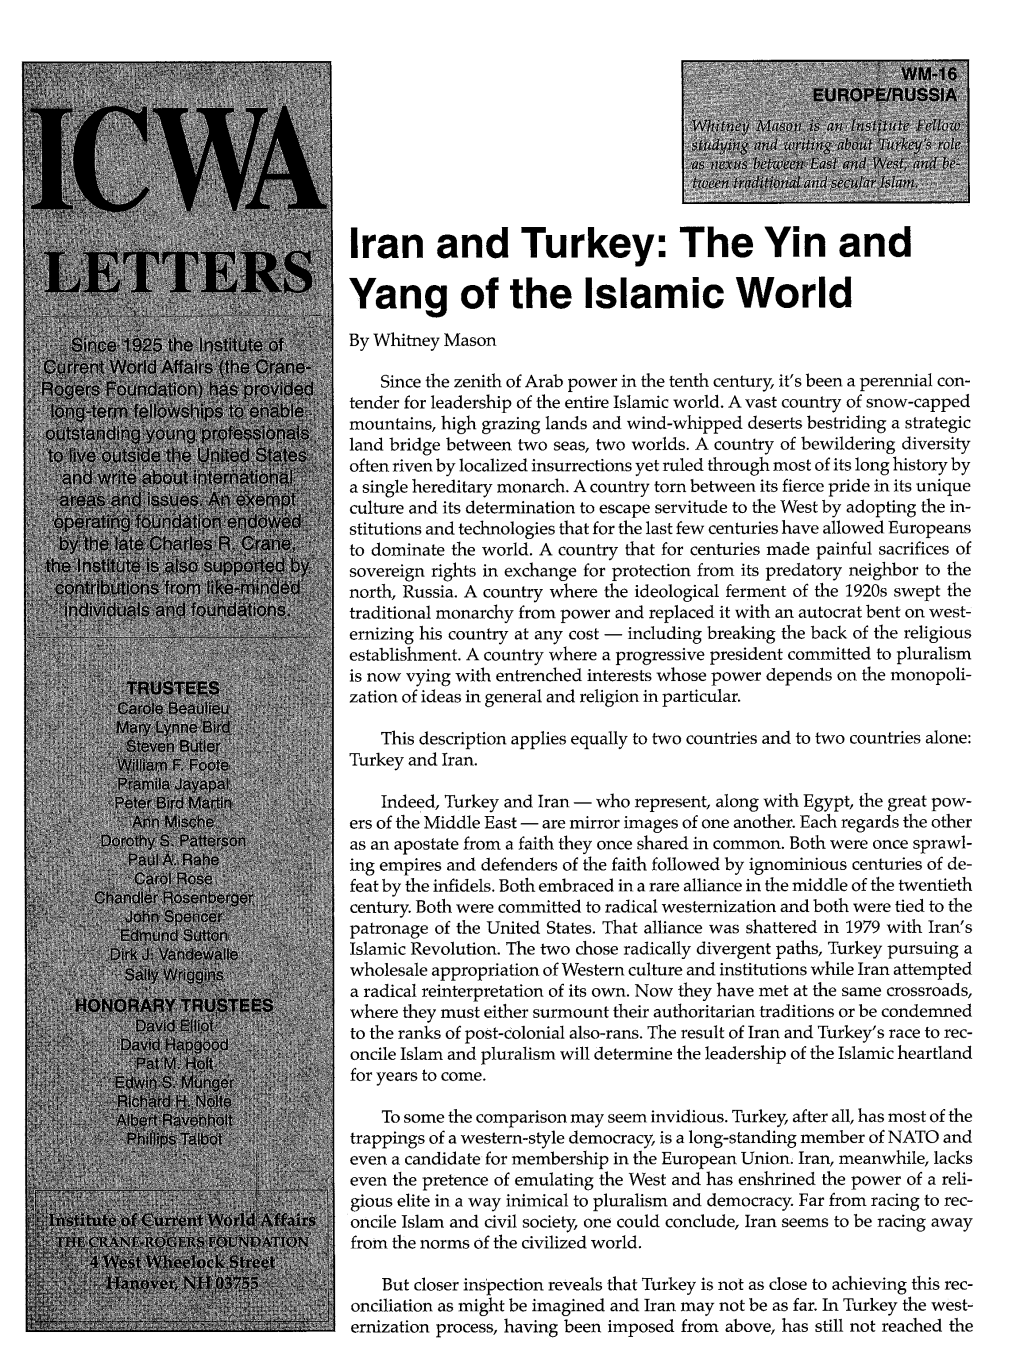 Iran and Turkey: the Yin and Yang of the Islamic World by Whitney Mason